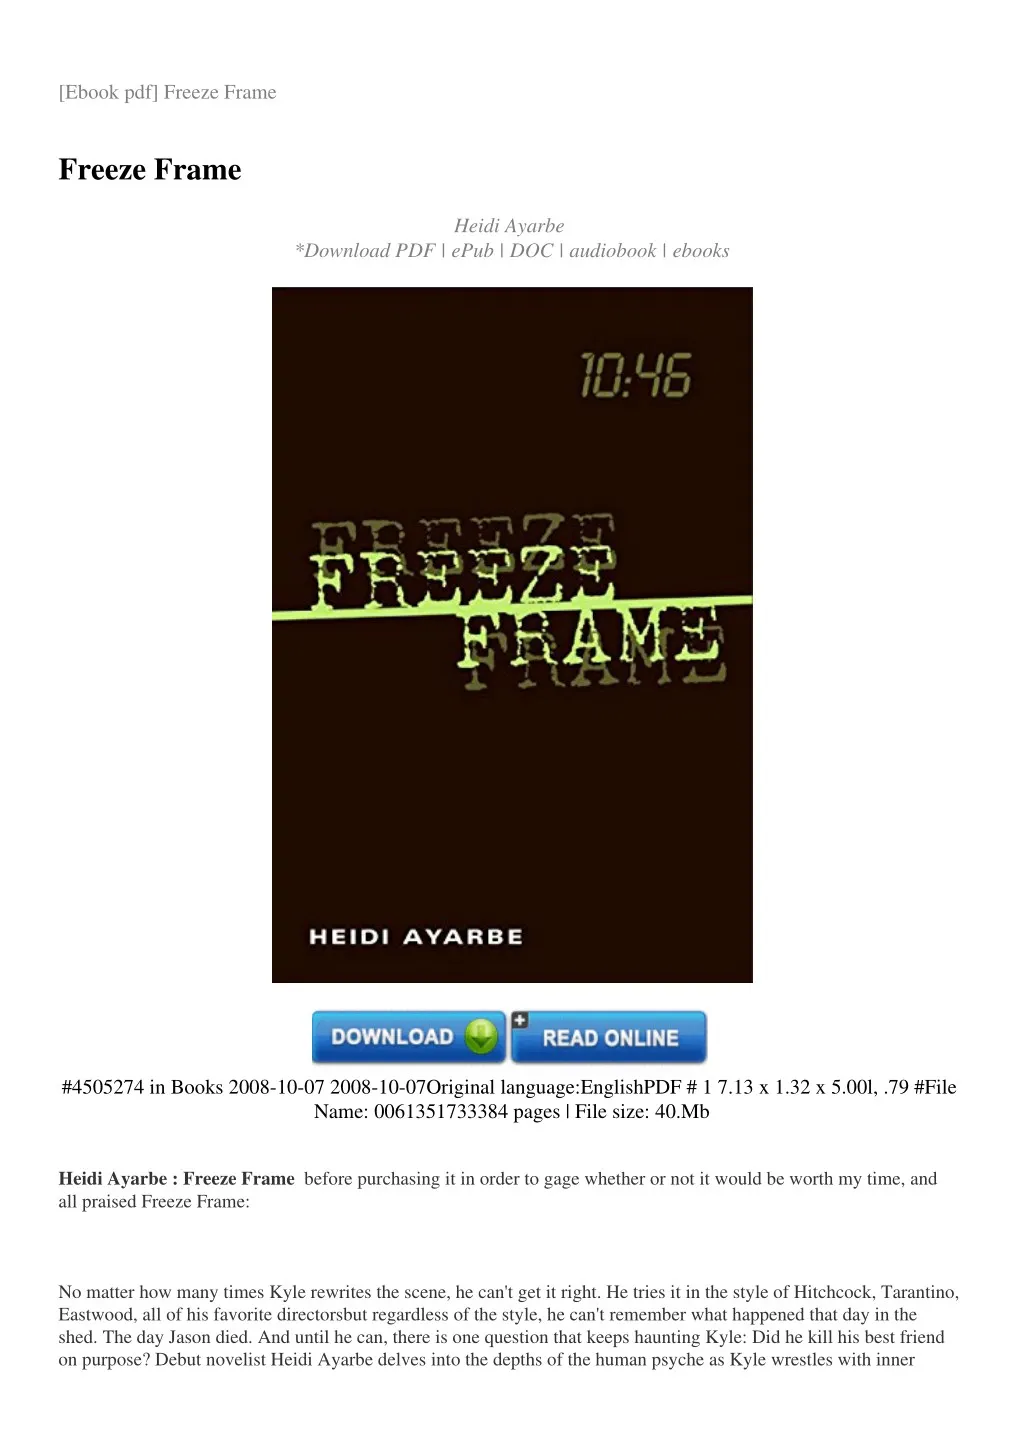 ebook pdf freeze frame